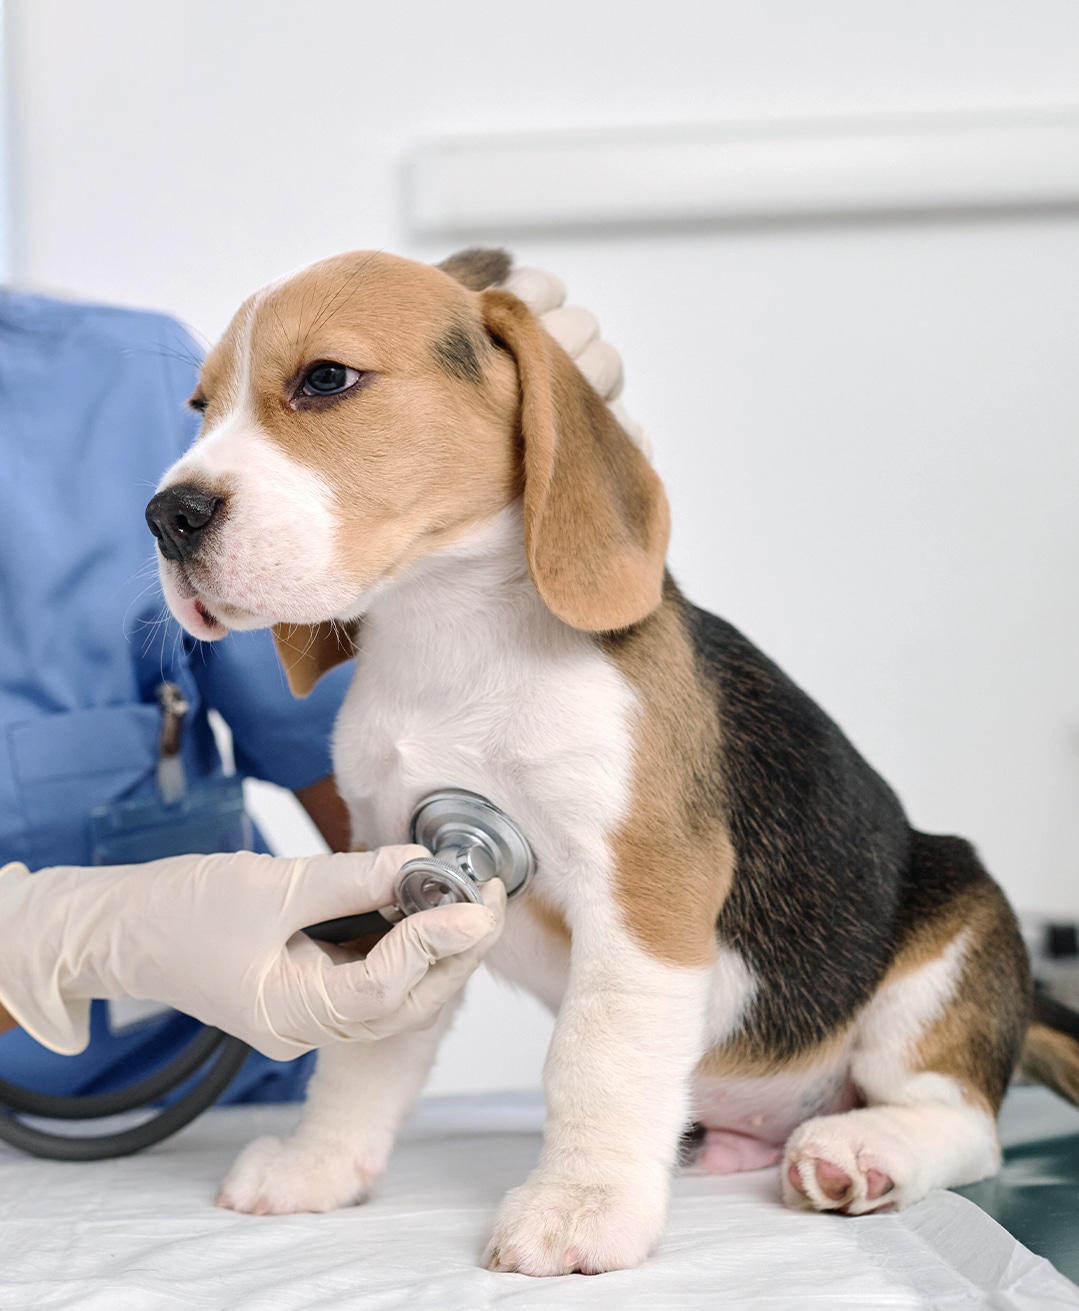 A veterinarian doing a checkup on a beagle dog